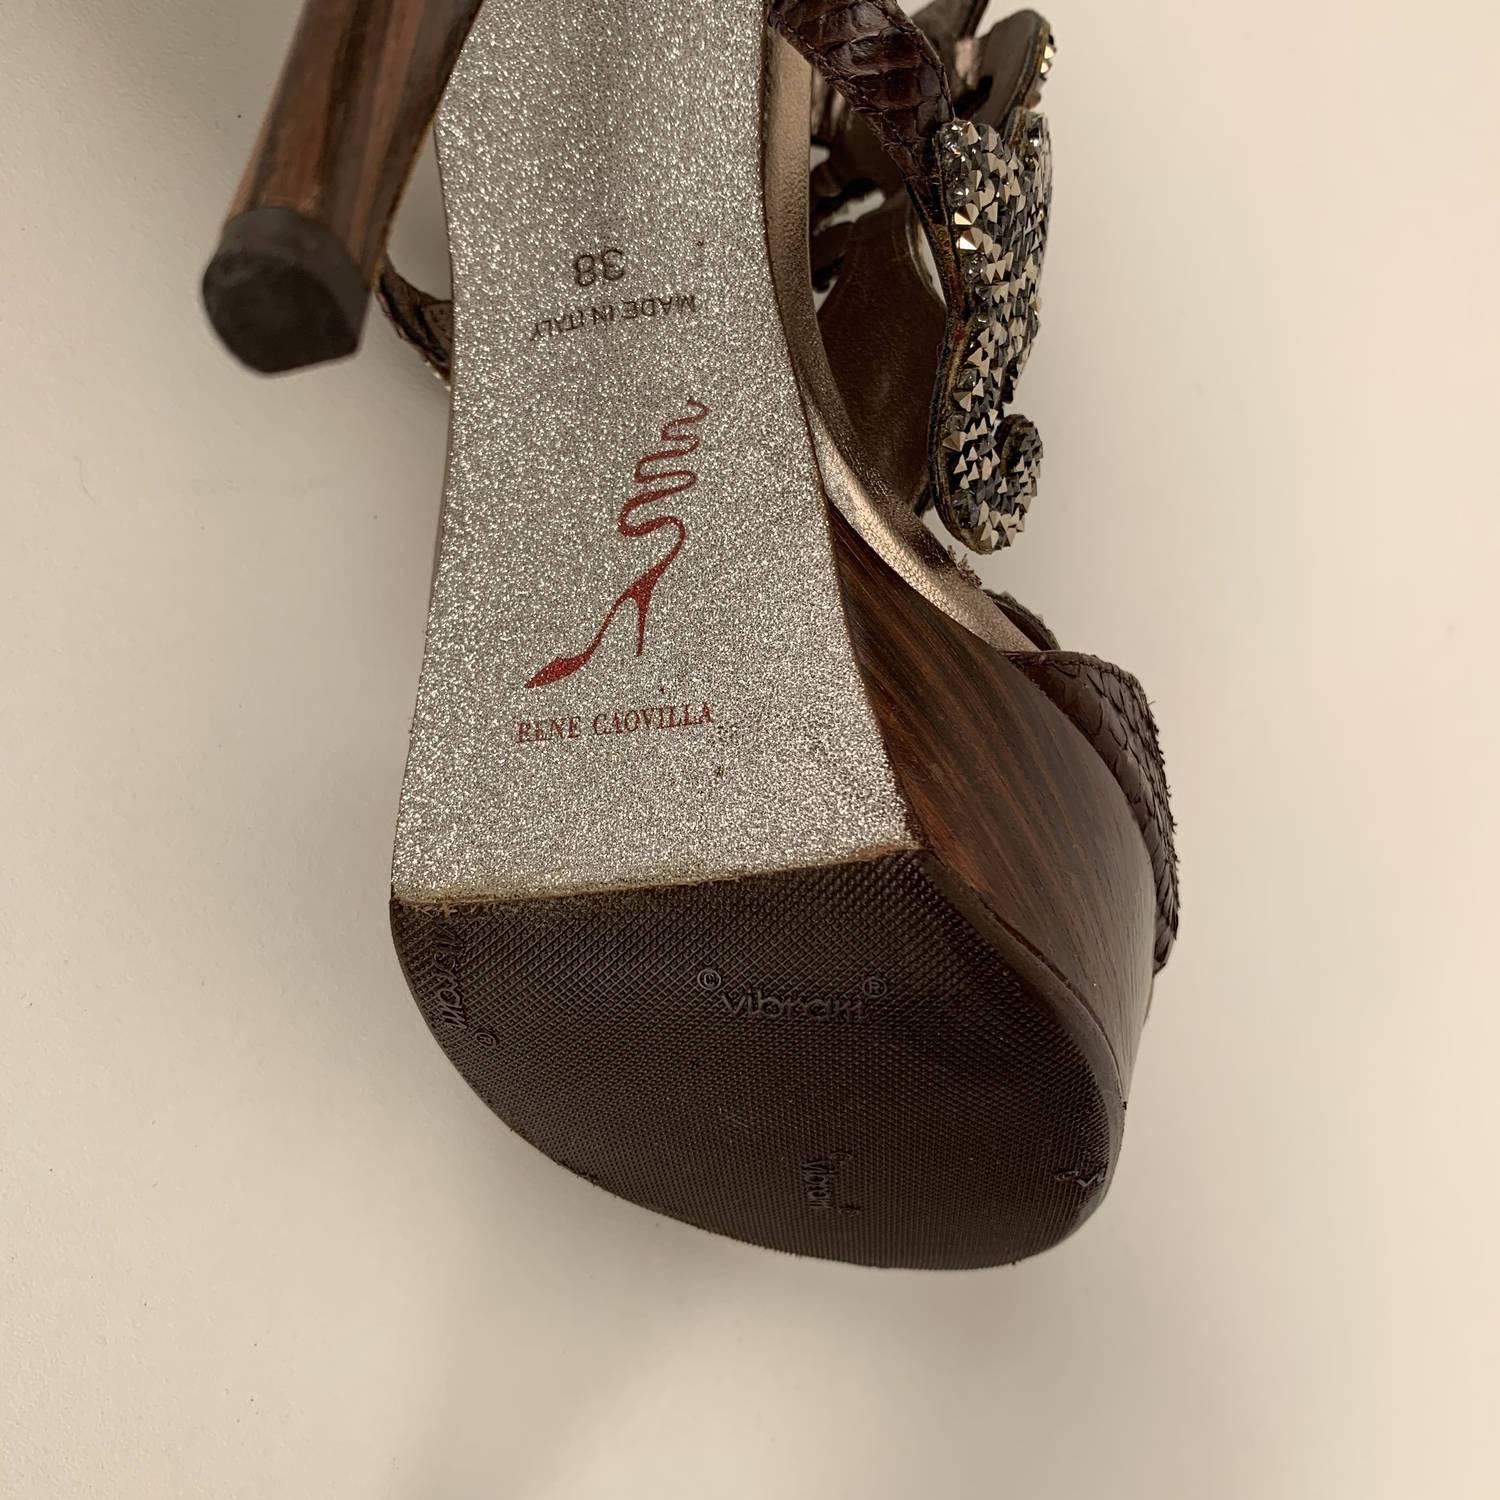 René Caovilla Rhinestones Sandals Heels Size 38 2